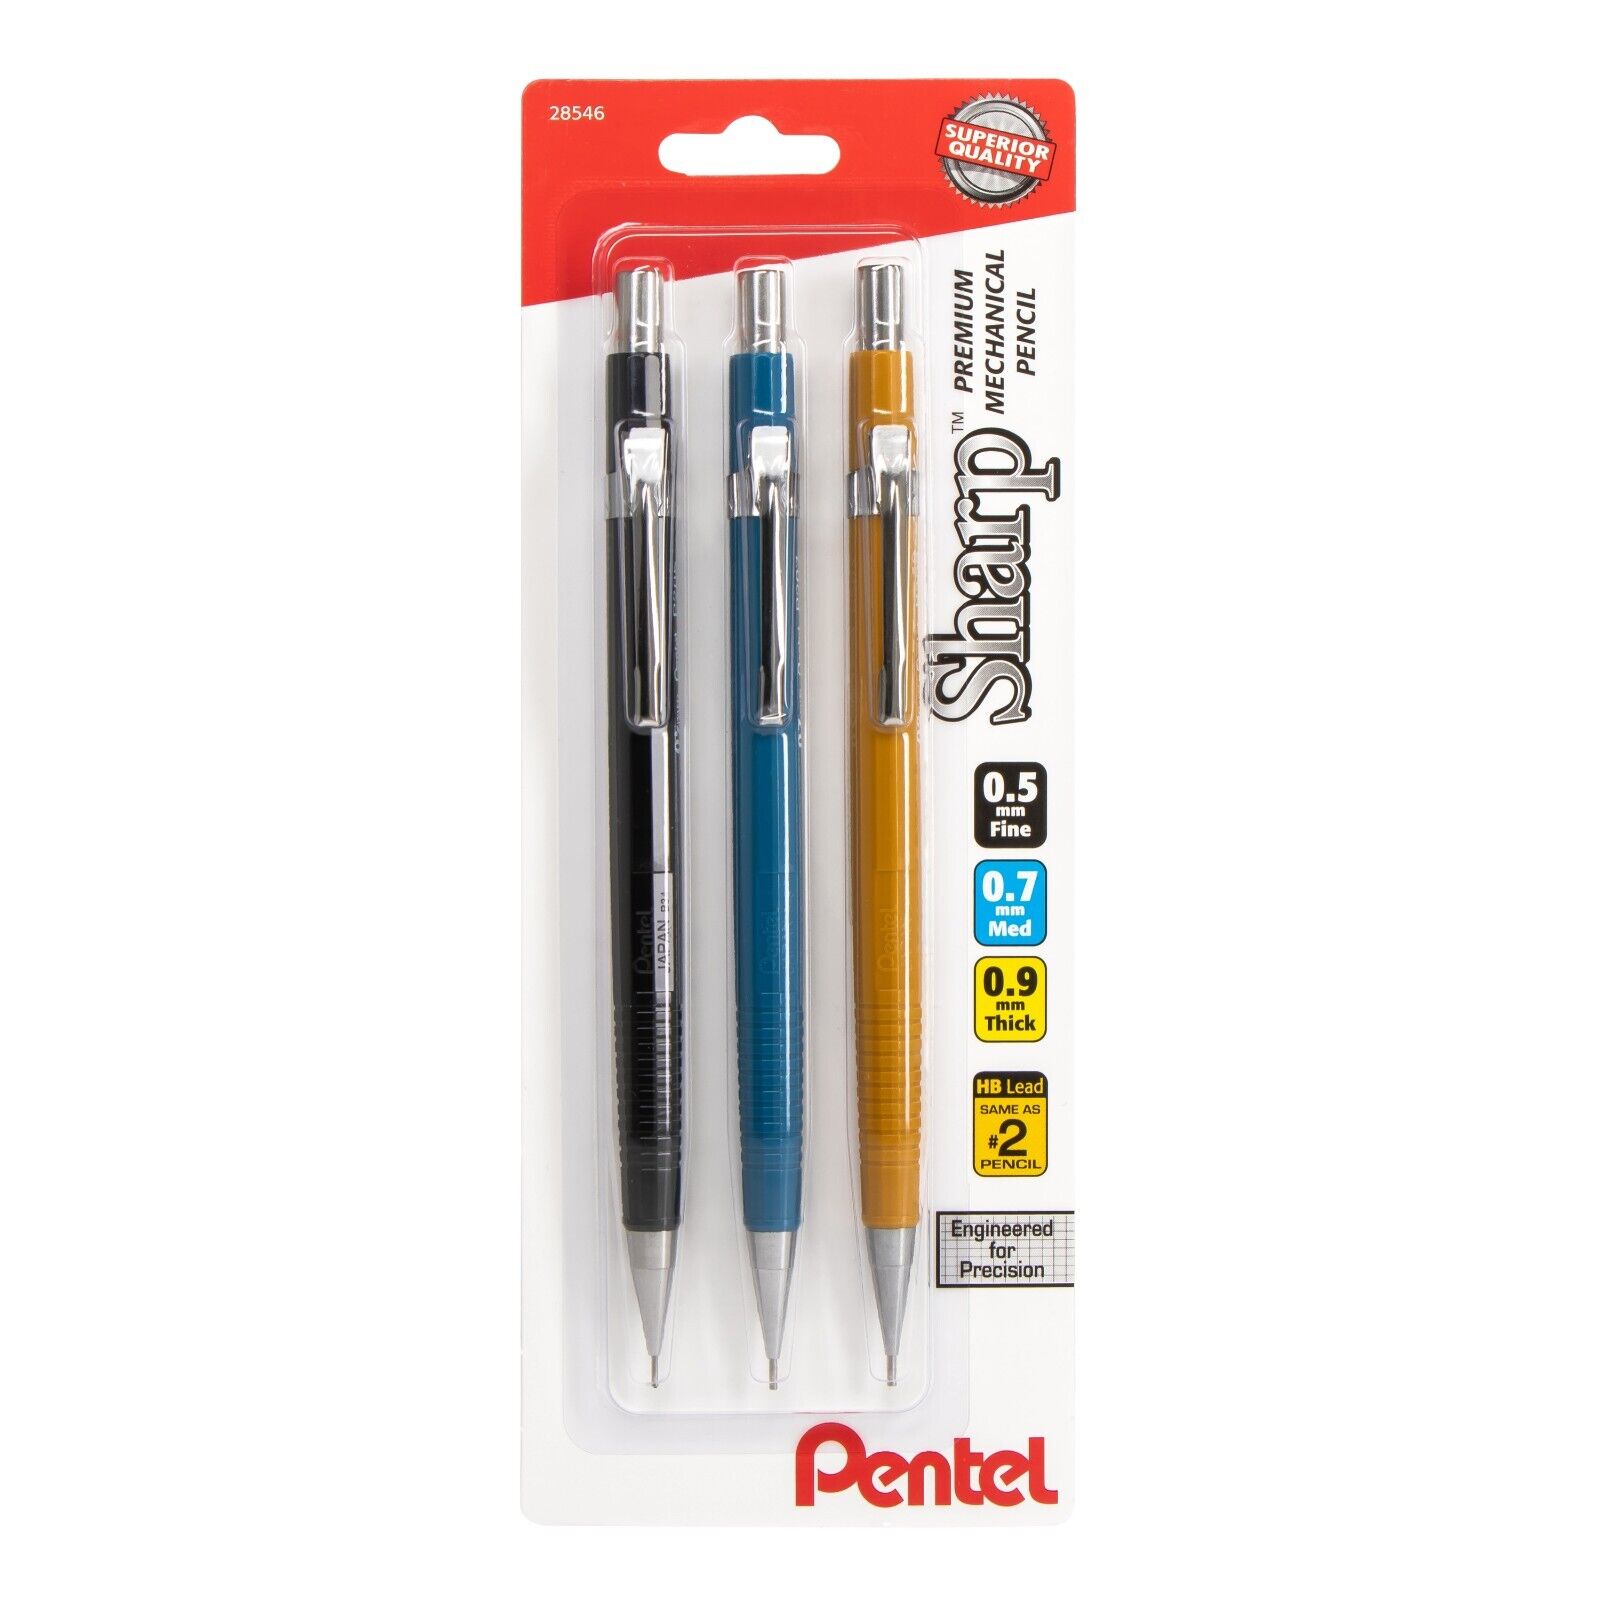 Pentel Sharp Mechanical Pencil 3 pack Assorted Colors 1 each 0.5mm, 0.7mm, 0.9mm